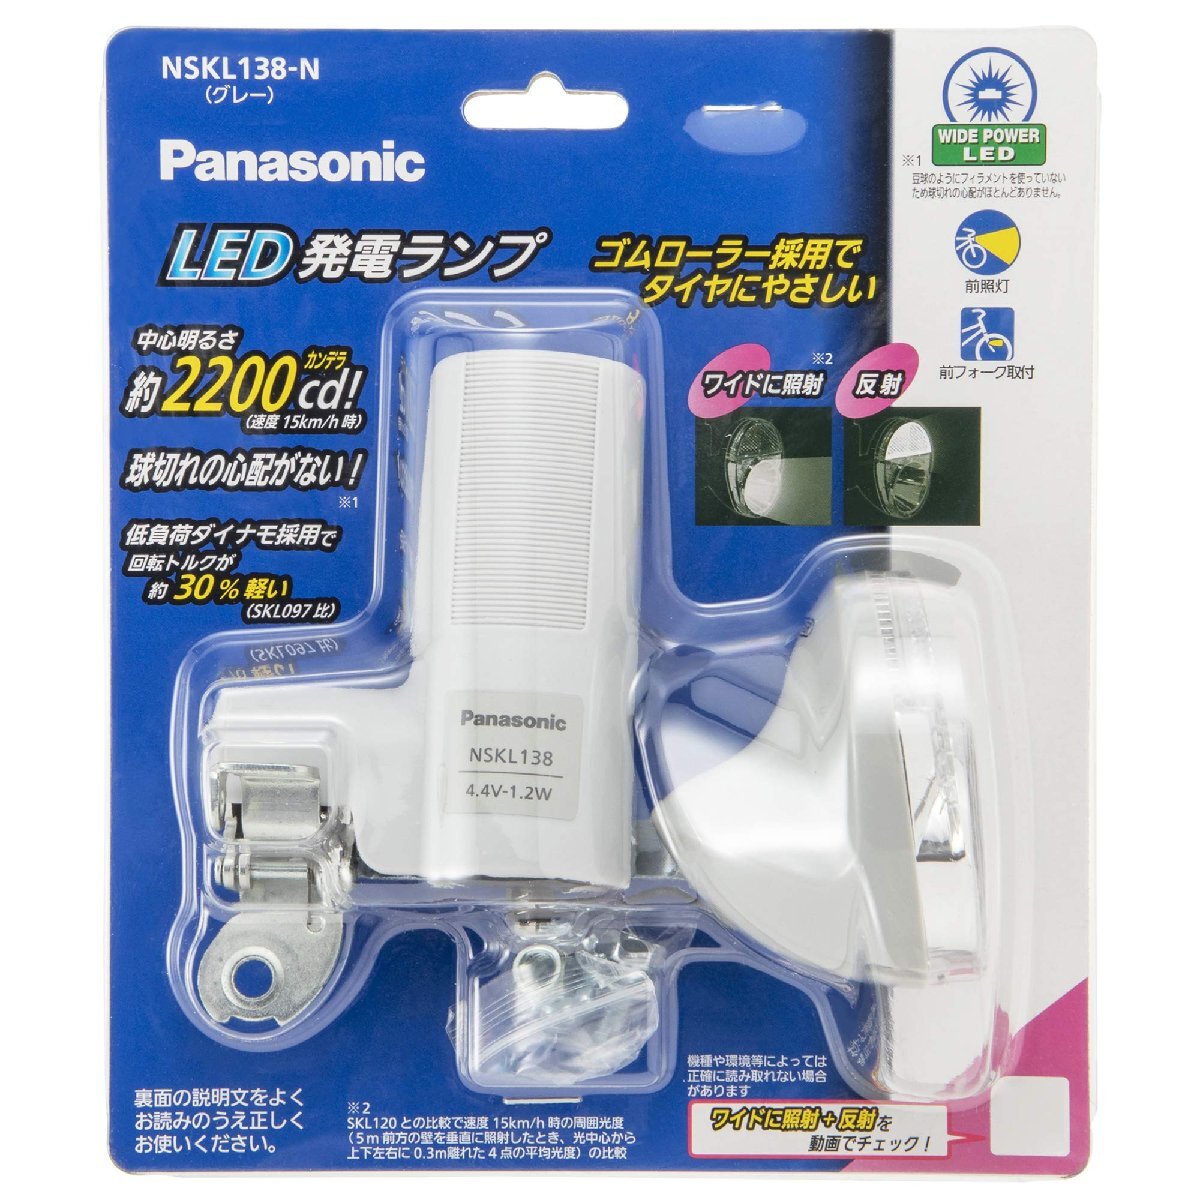  Panasonic (Panasonic) LED departure electro- lamp wide LED bicycle gray W58×D128×H105mm NSKL138-N